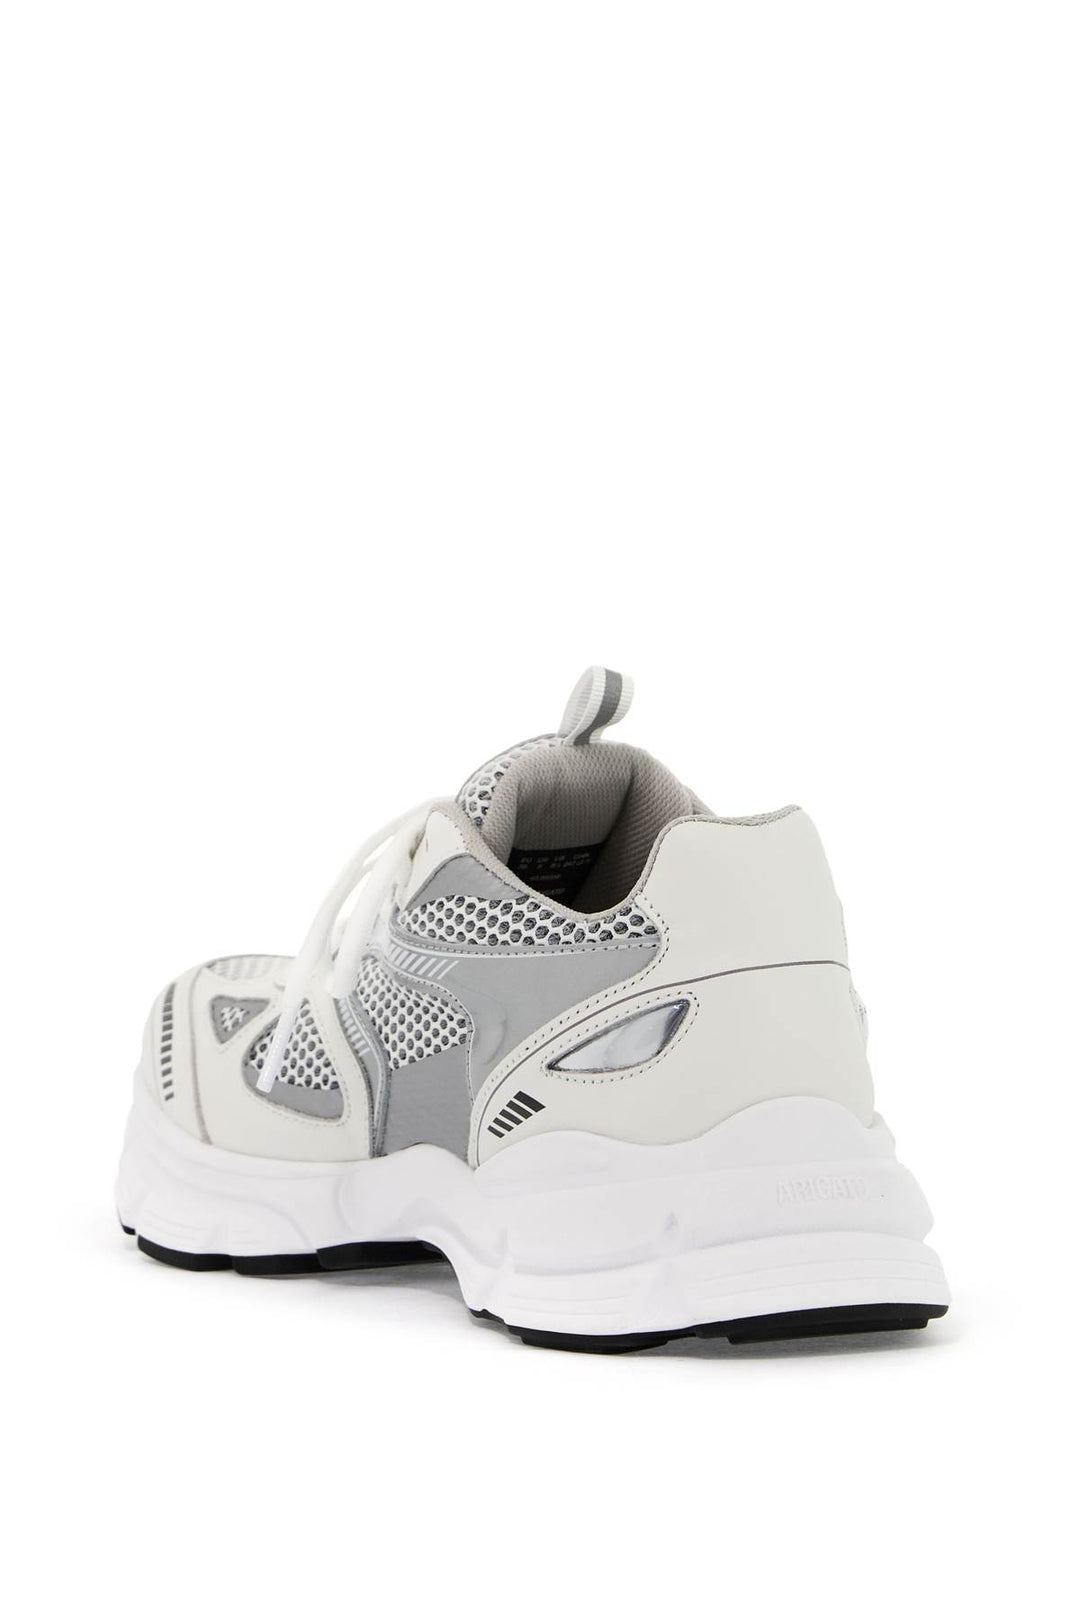 Axel Arigato Marathon Runner Sneakers   Grey